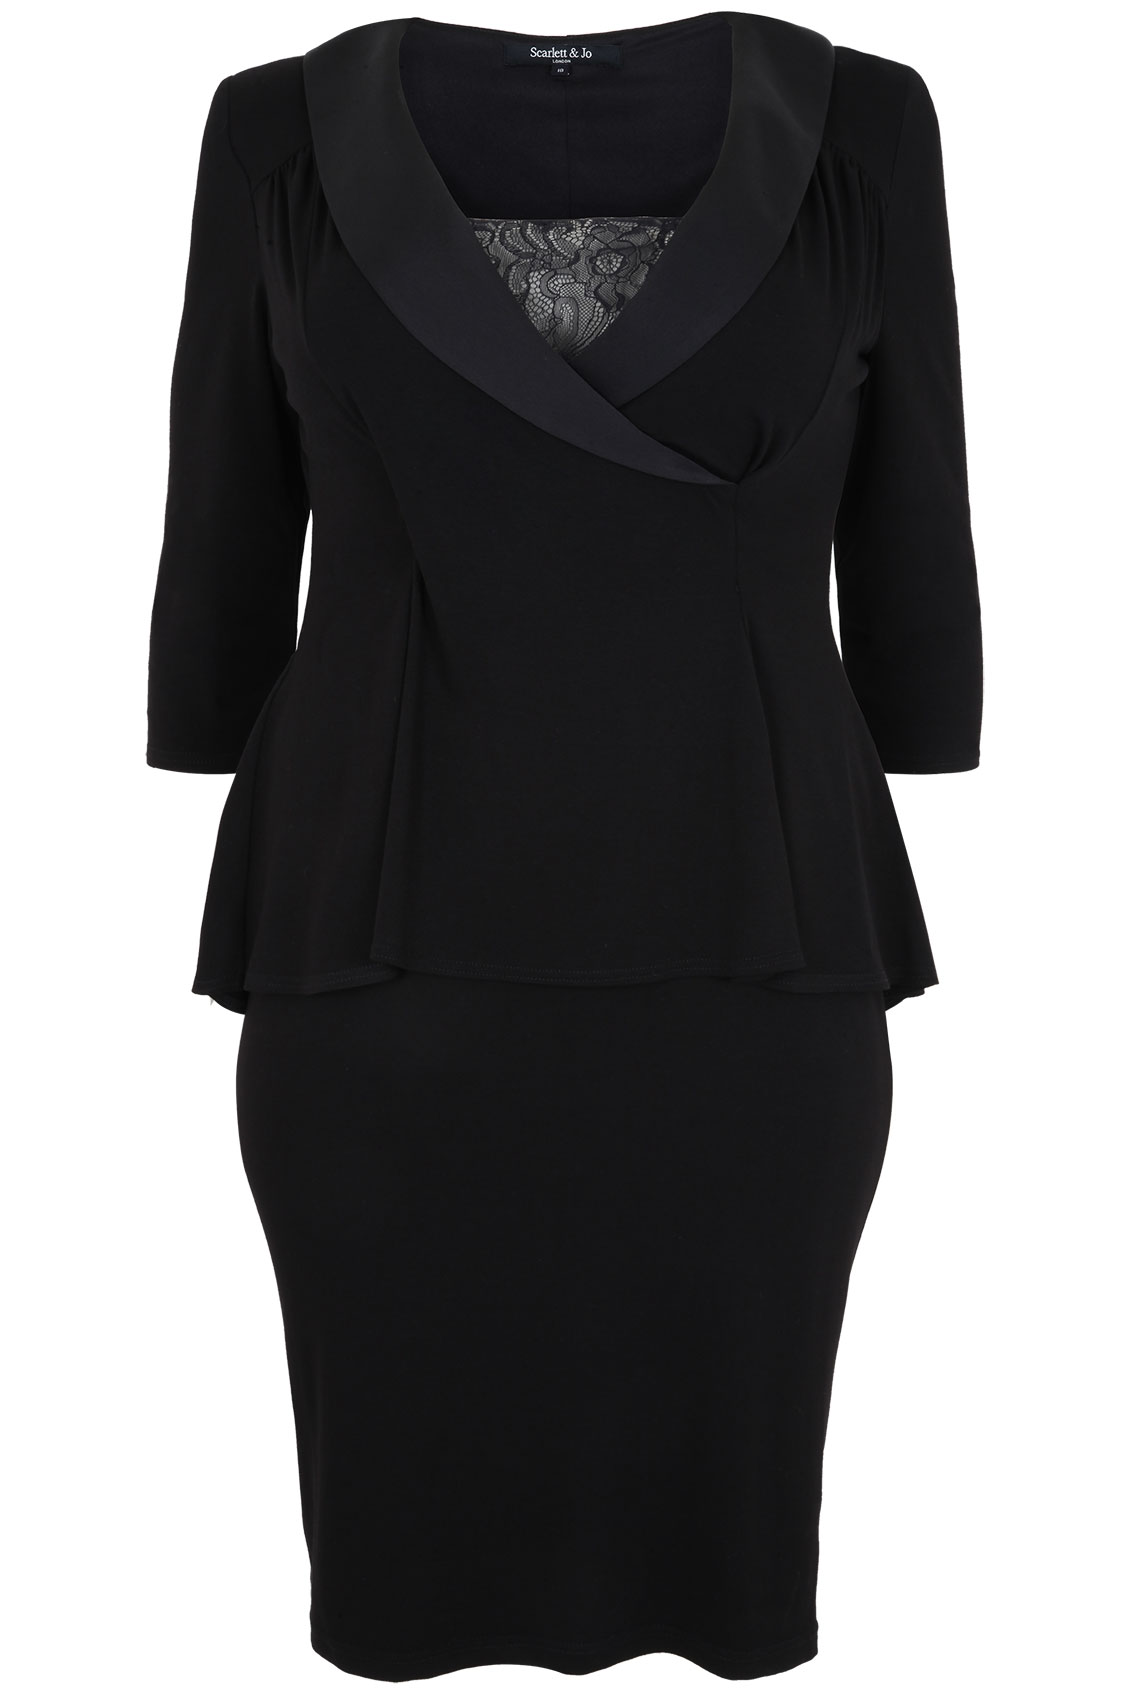 SCARLETT & JO Black Tuxedo Peplum Dress, Plus size 16 to 32